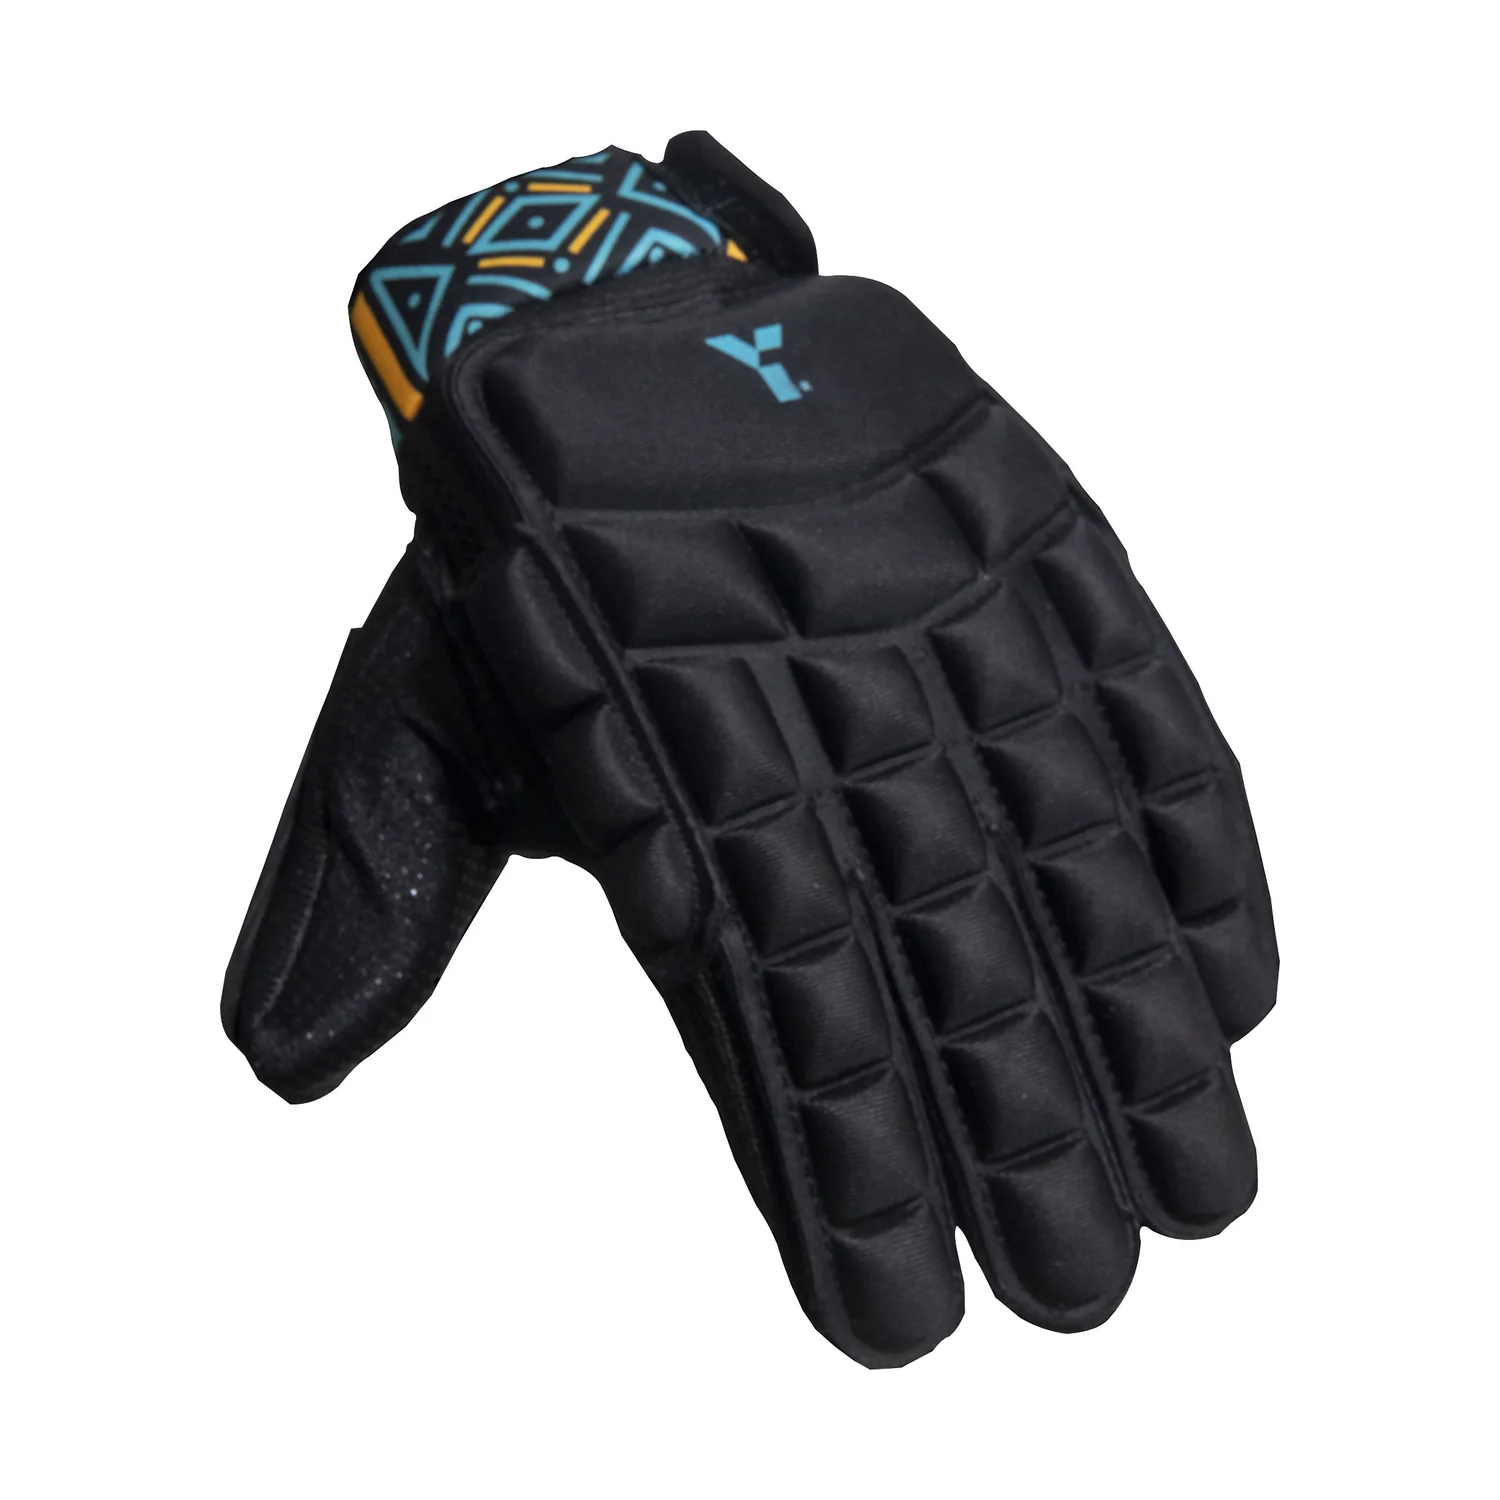 Y1 - AT6 Foam Glove